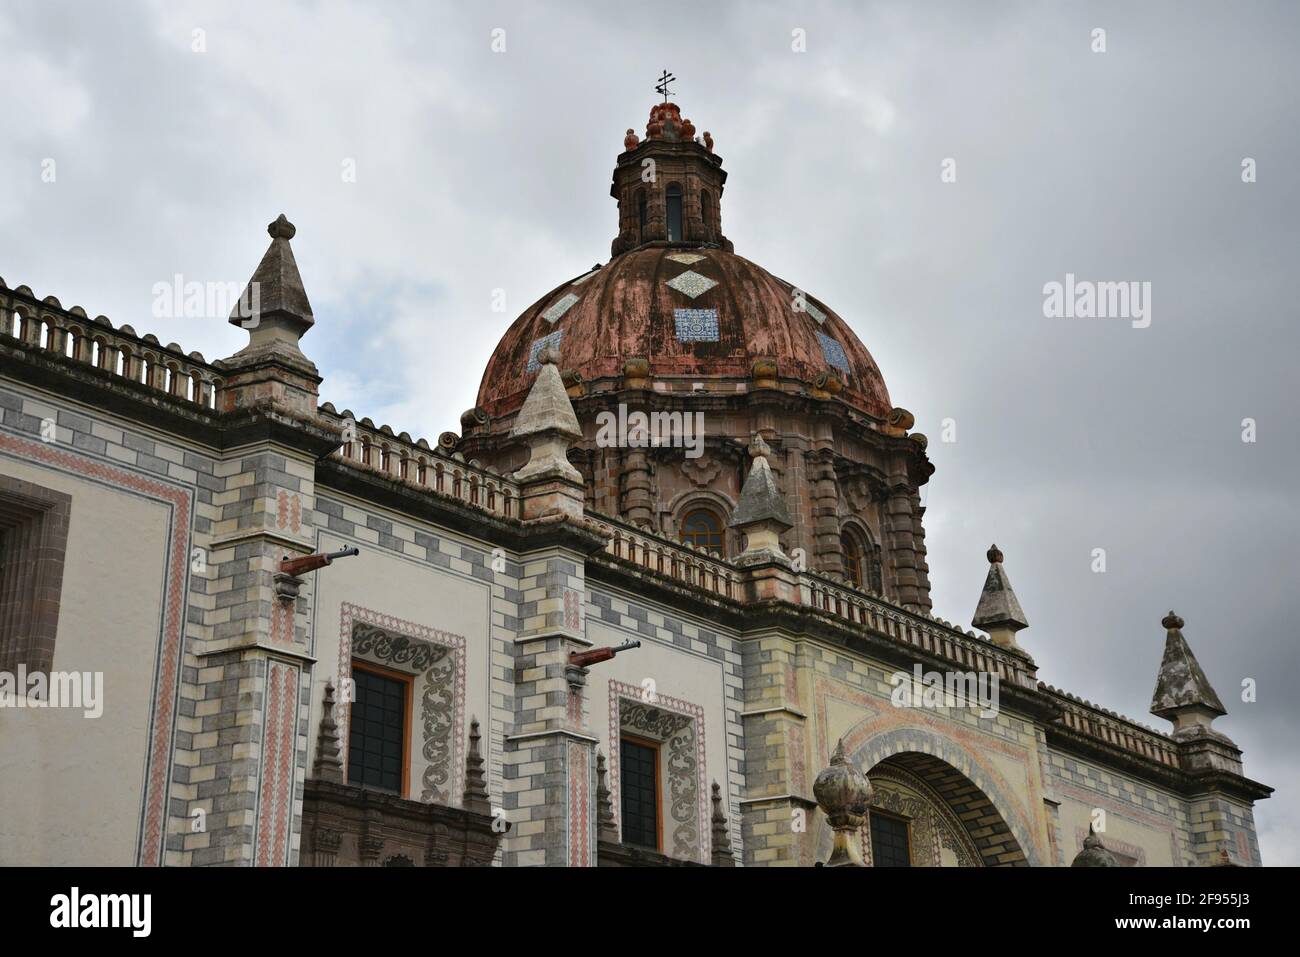 Dome view of the Baroque style Santa Rosa de Viterbo in Plazuela Mariano de Las Casas, Santiago de Querétaro, Mexico. Stock Photo